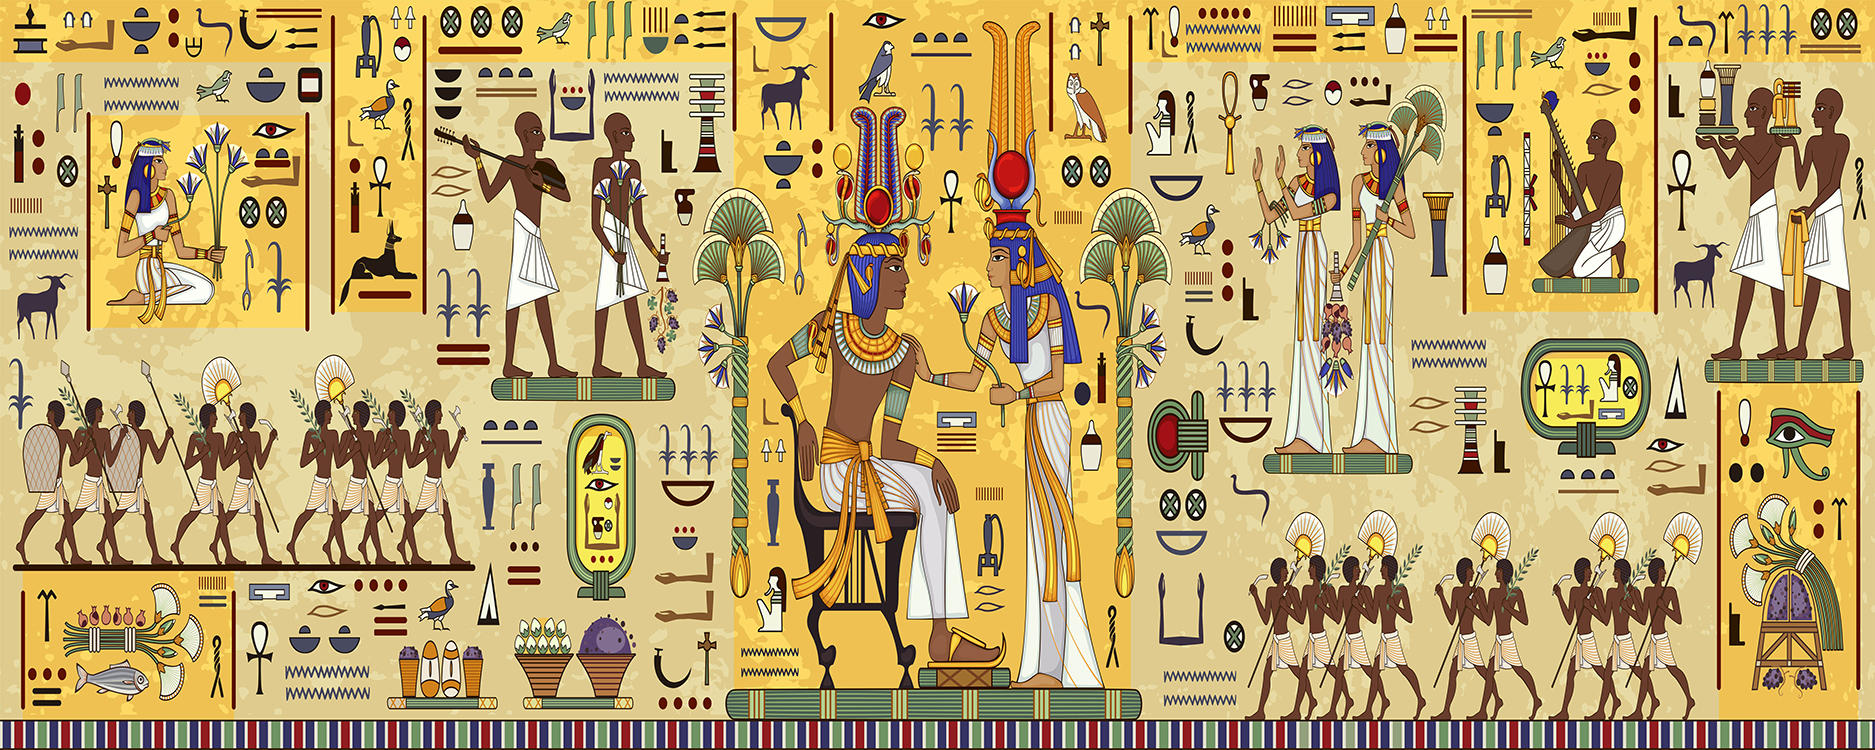 Фреска с иероглифами Египта